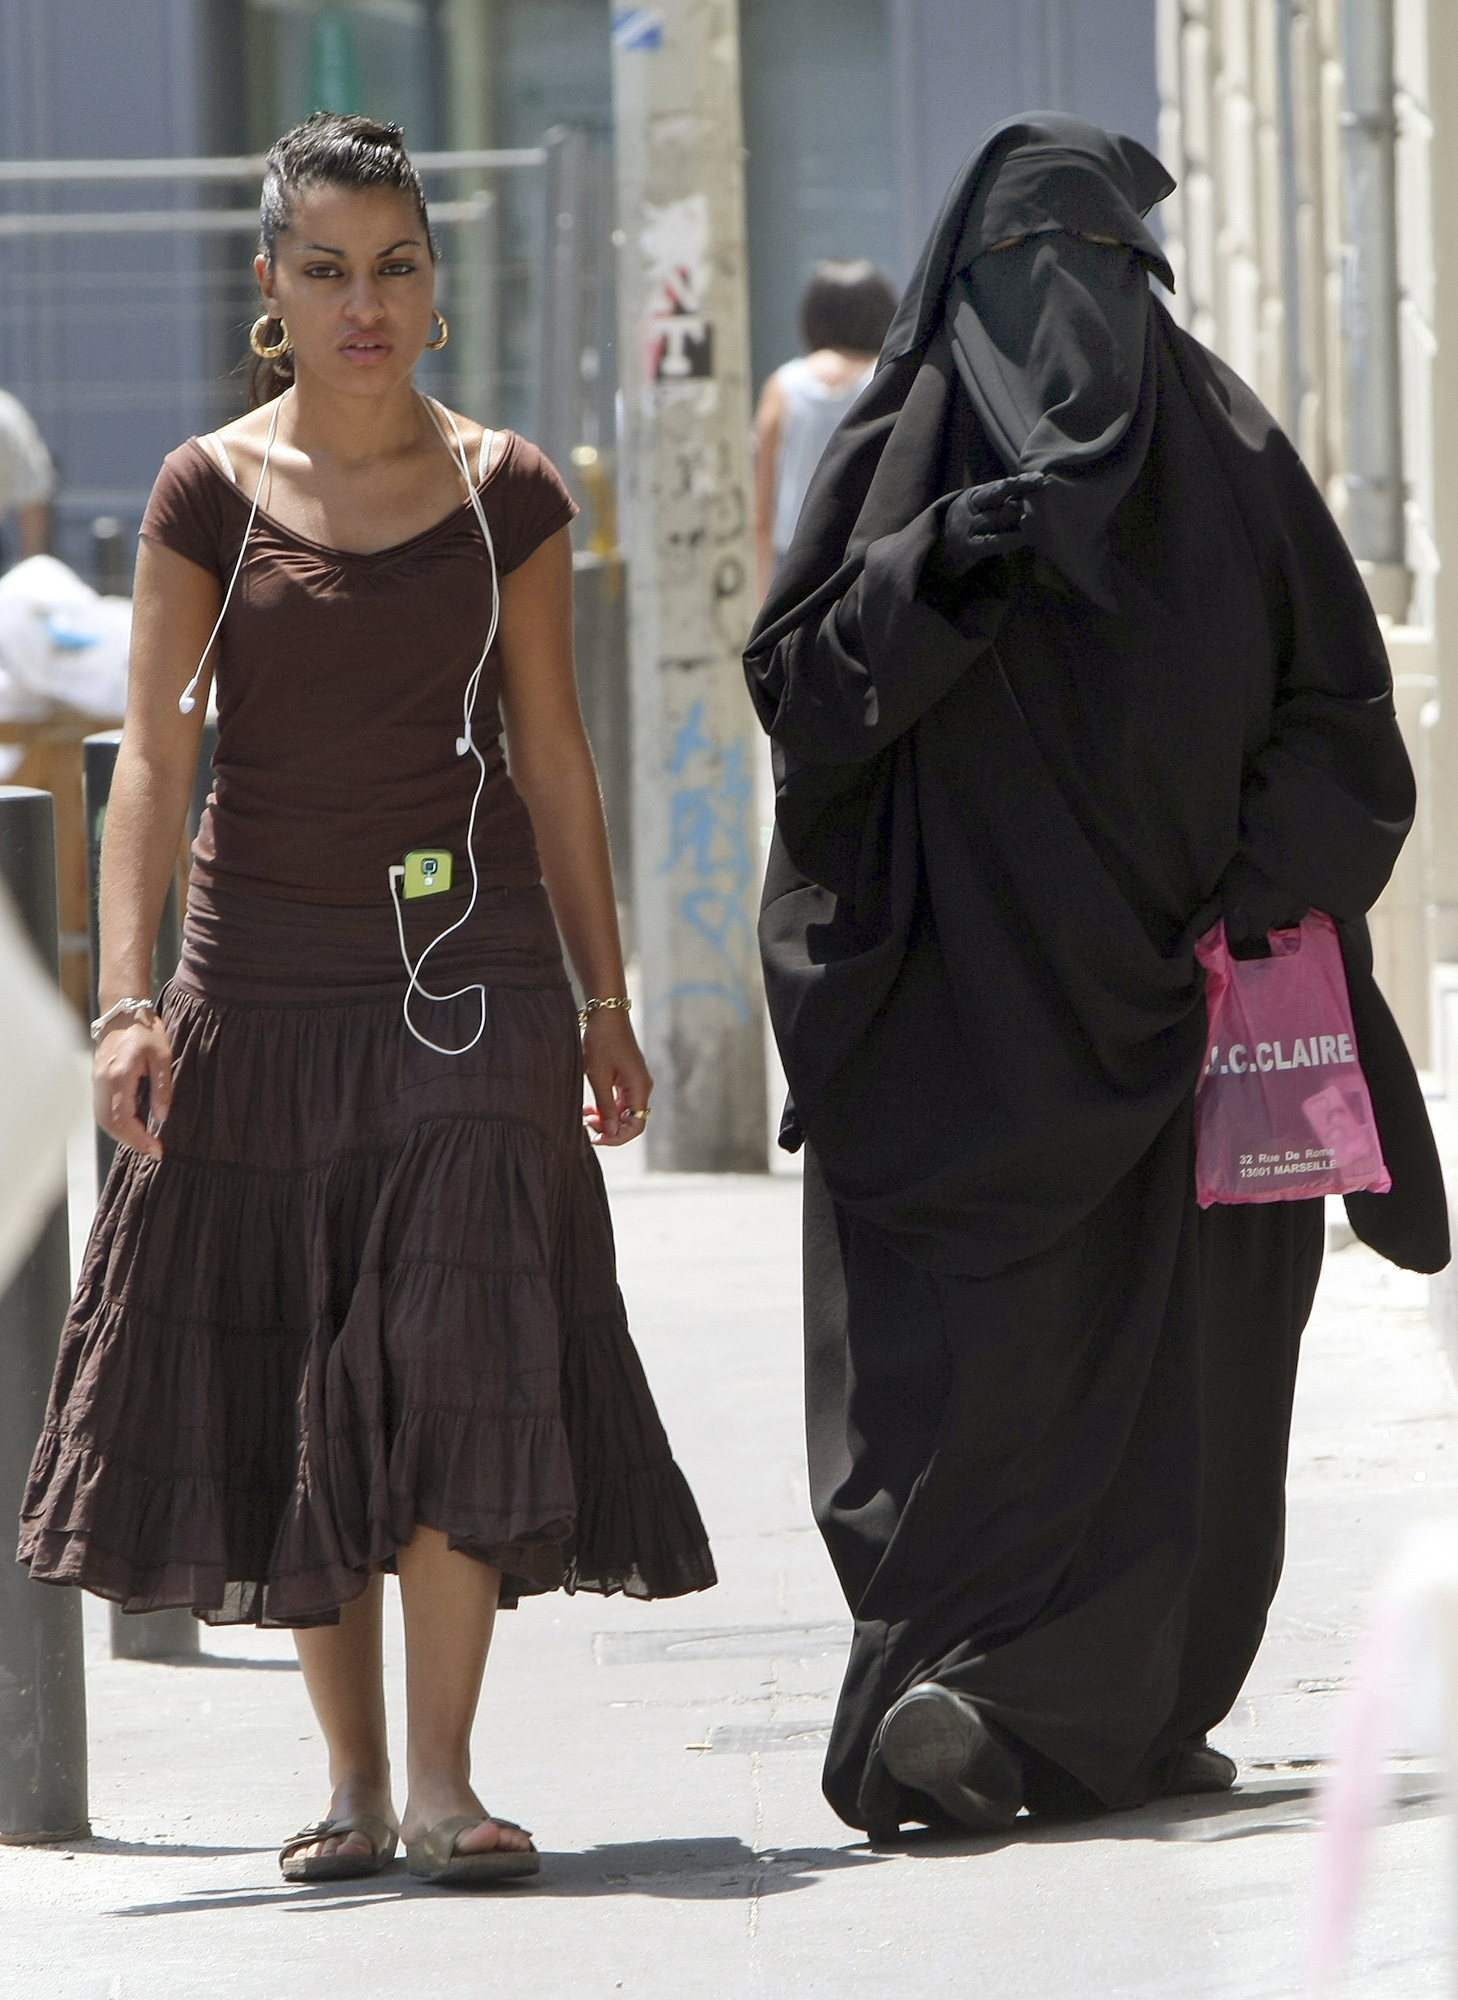 Muslimer, Niqab, Burkaförbud, Islamofobi, Forbud, Burka